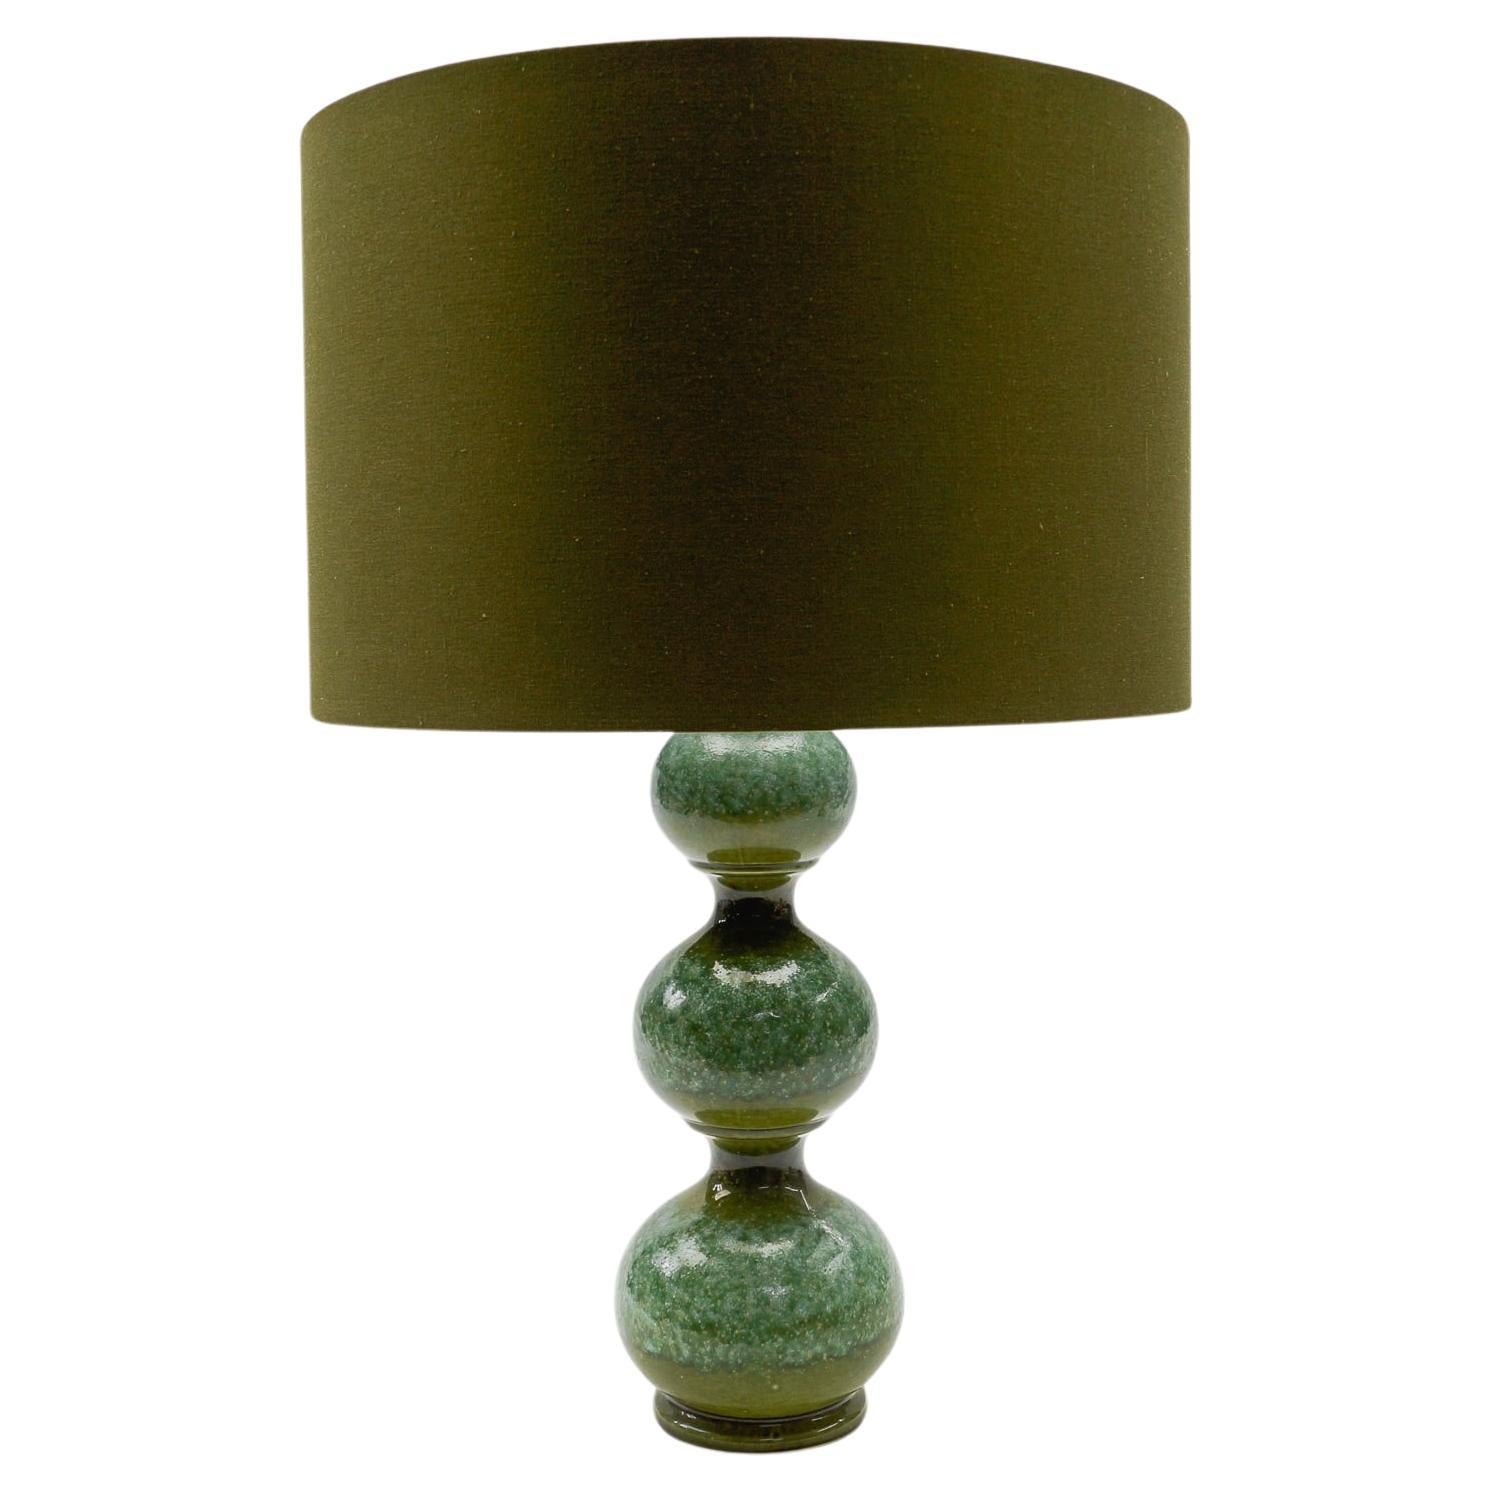 Very Rare Green Ceramic Table Lamp Base from Kaiser Leuchten, Germany 1960s - For Sale